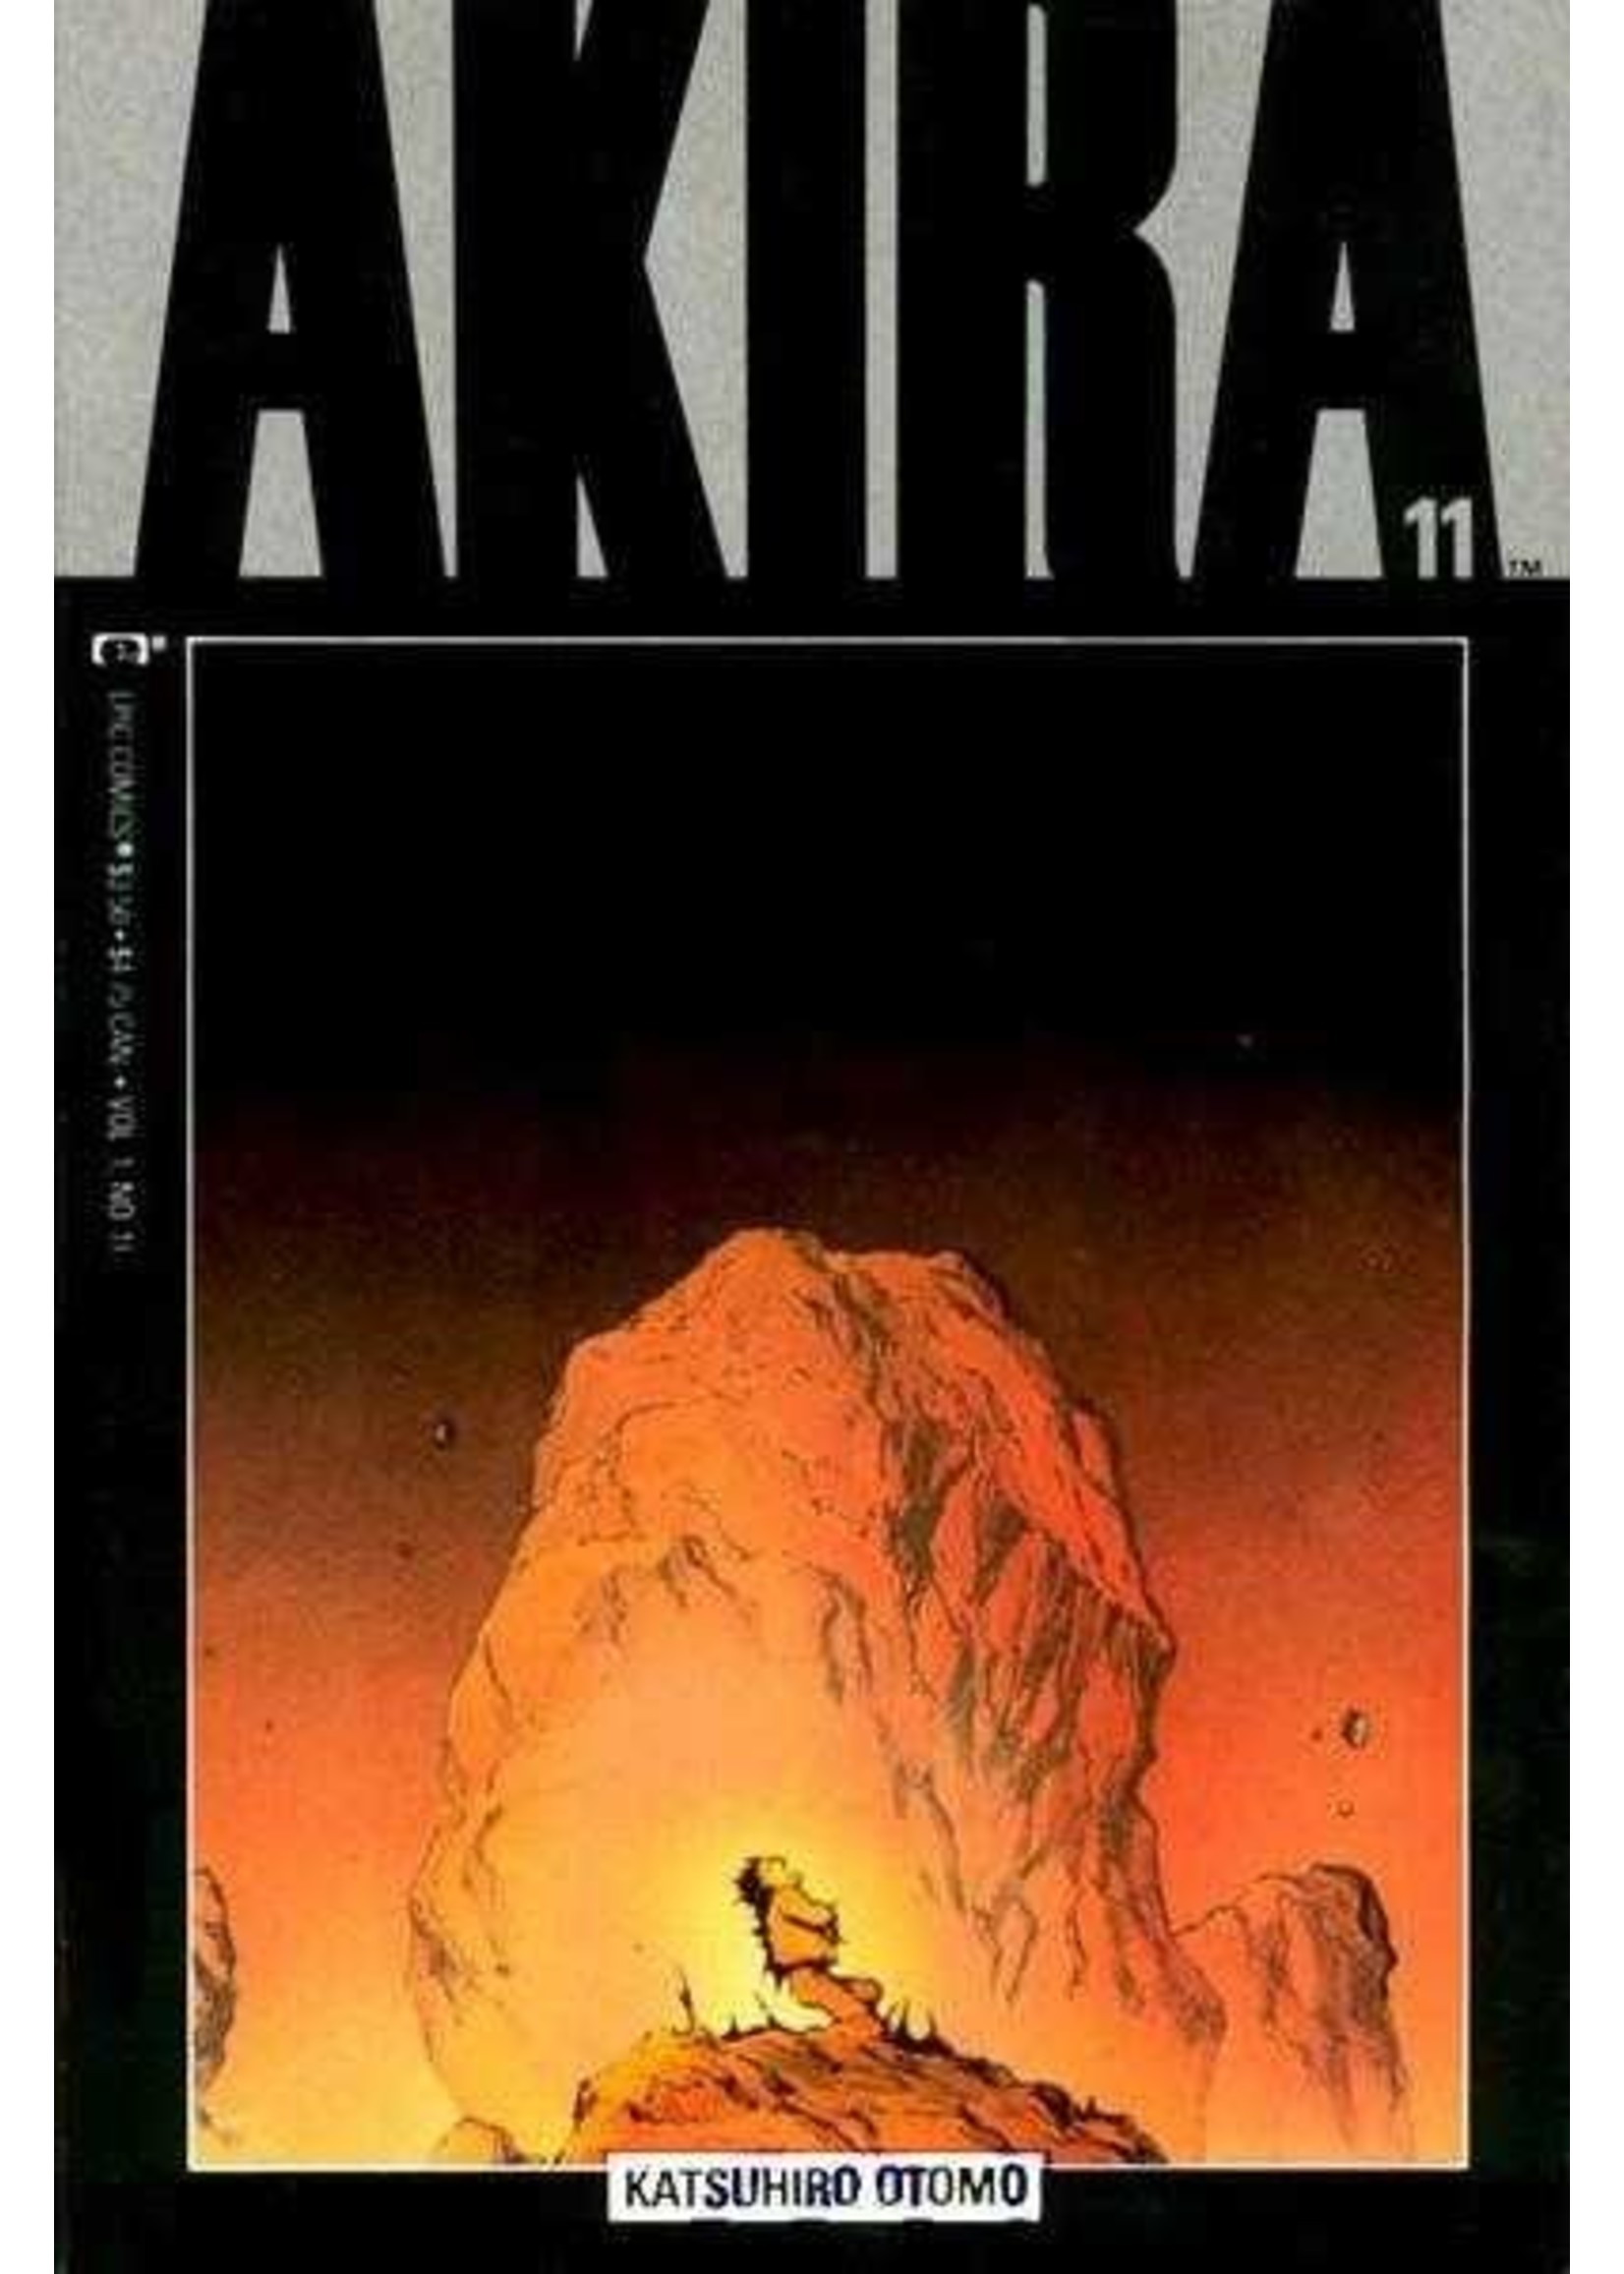 MARVEL COMICS AKIRA #11 (Epic 1988)